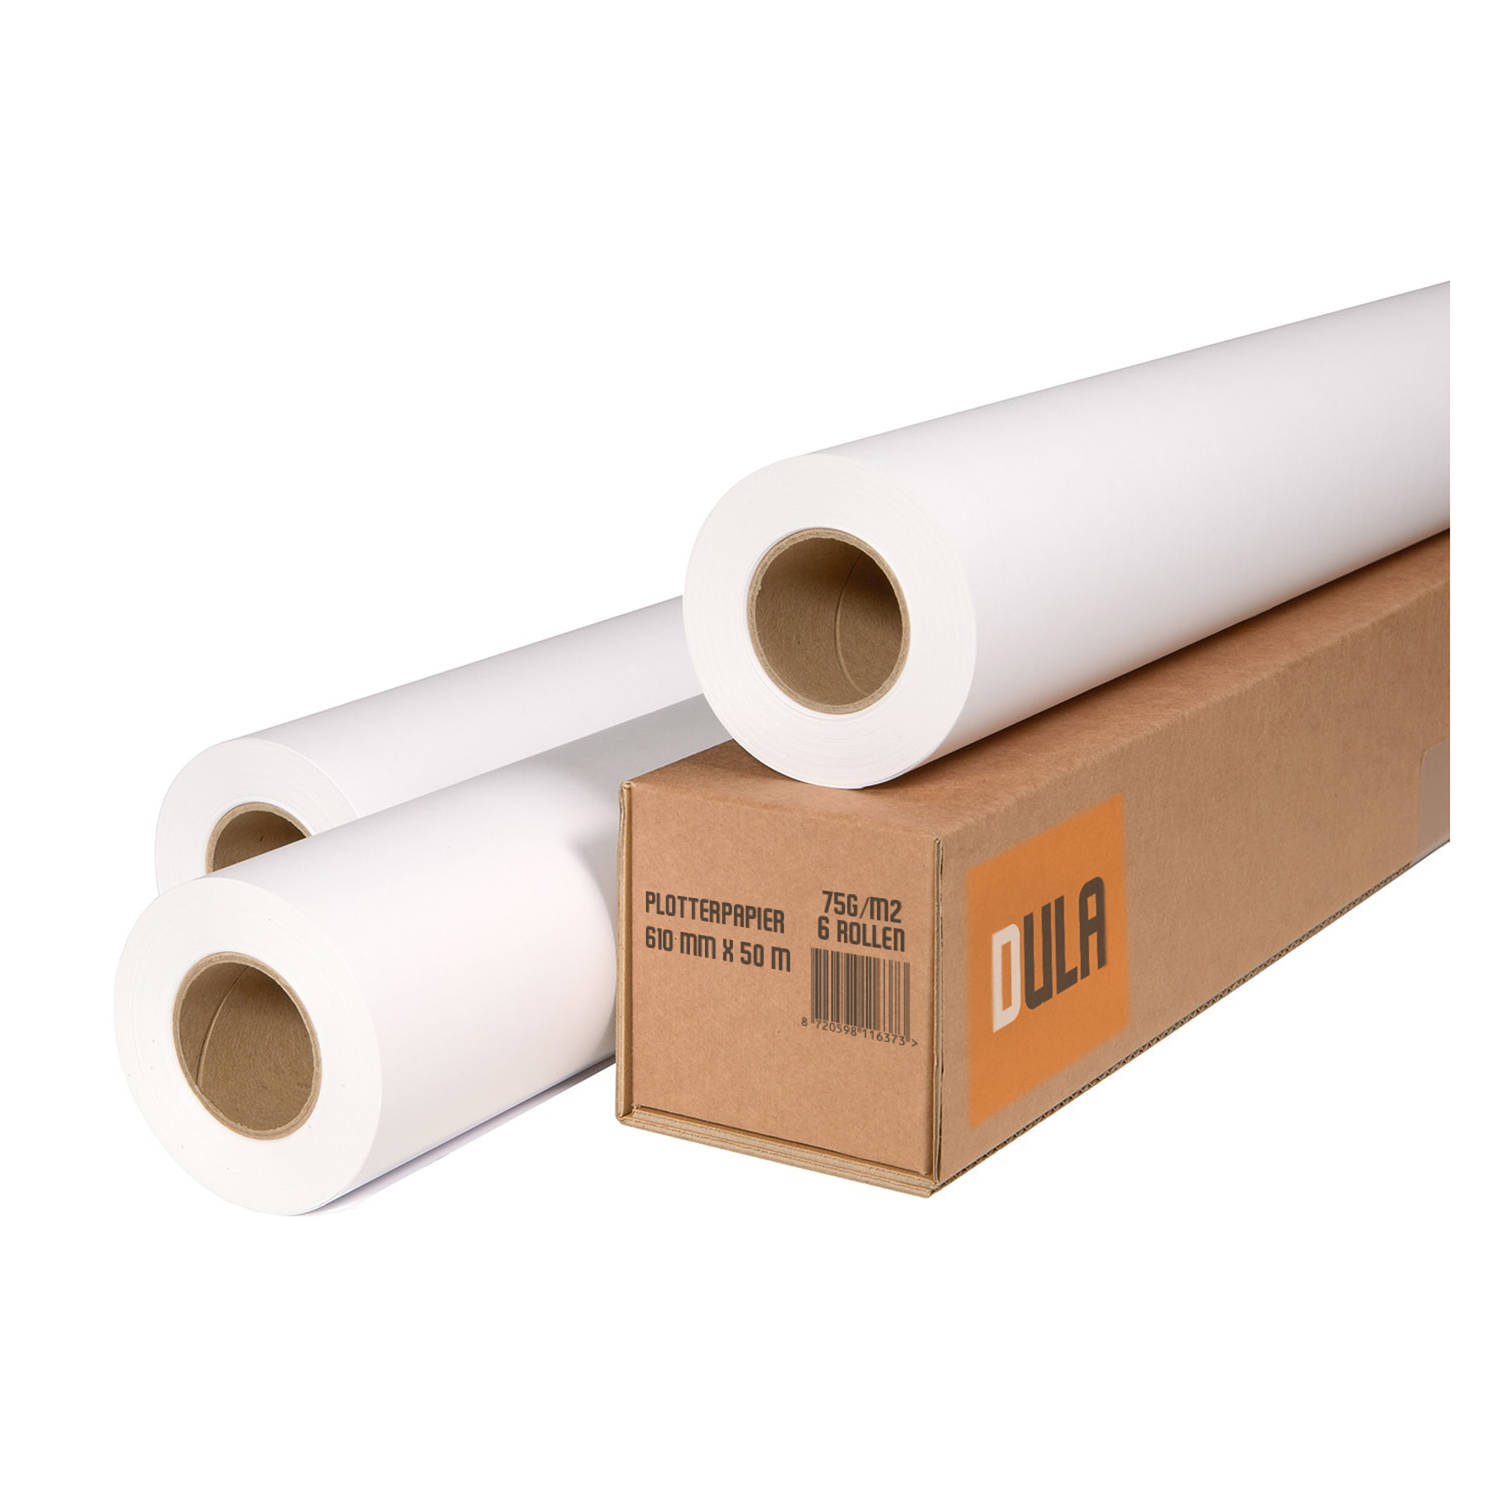 DULA Plotterpapier inkjetpapier 610mm x 50m 75 gram 6 rollen A1 oversize papier 24 inch